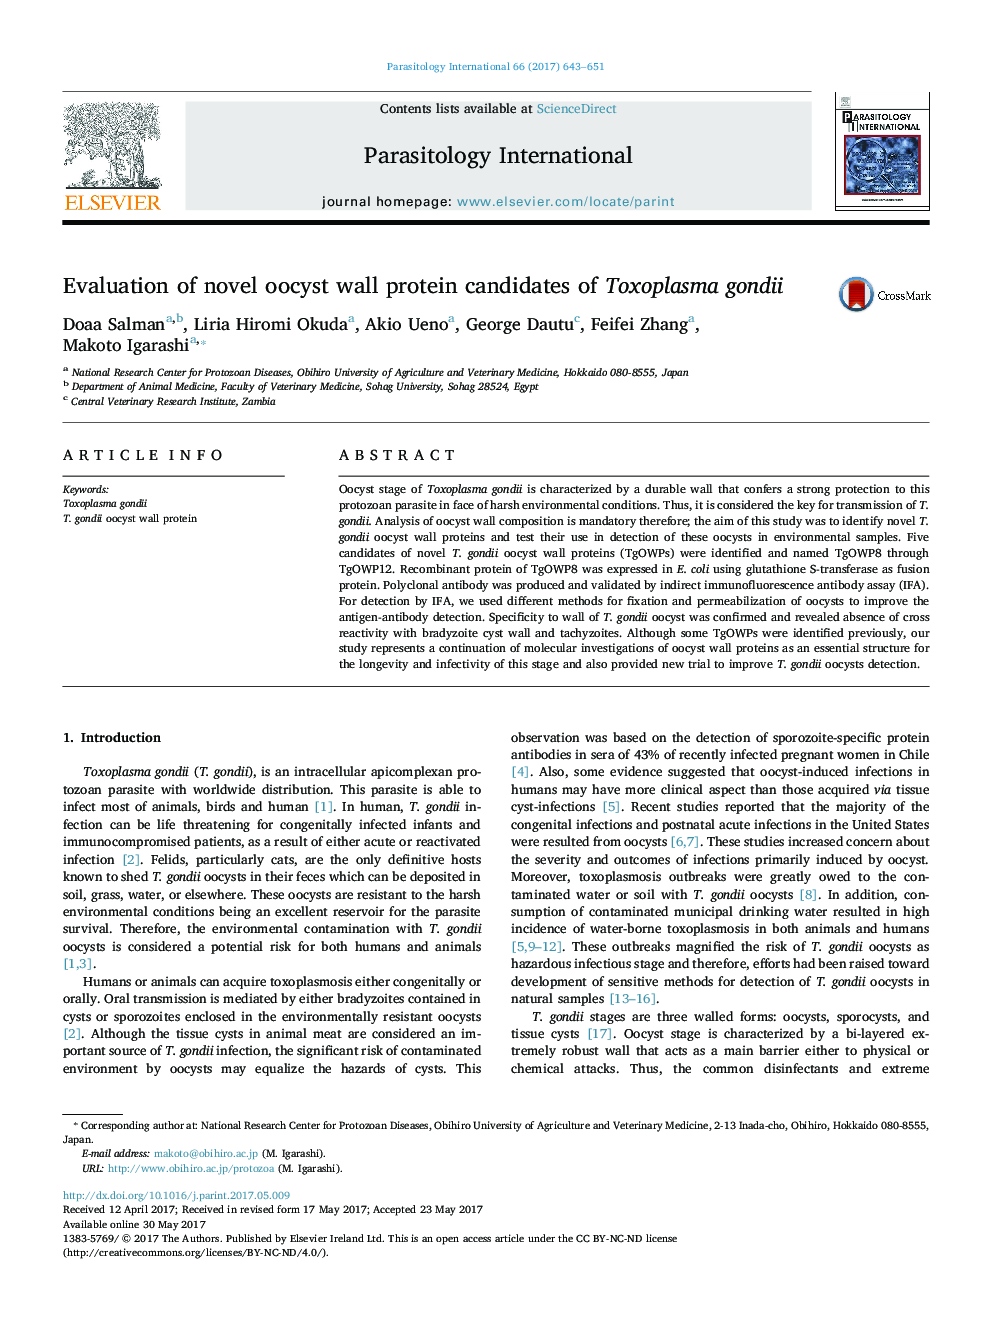 Evaluation of novel oocyst wall protein candidates of Toxoplasma gondii